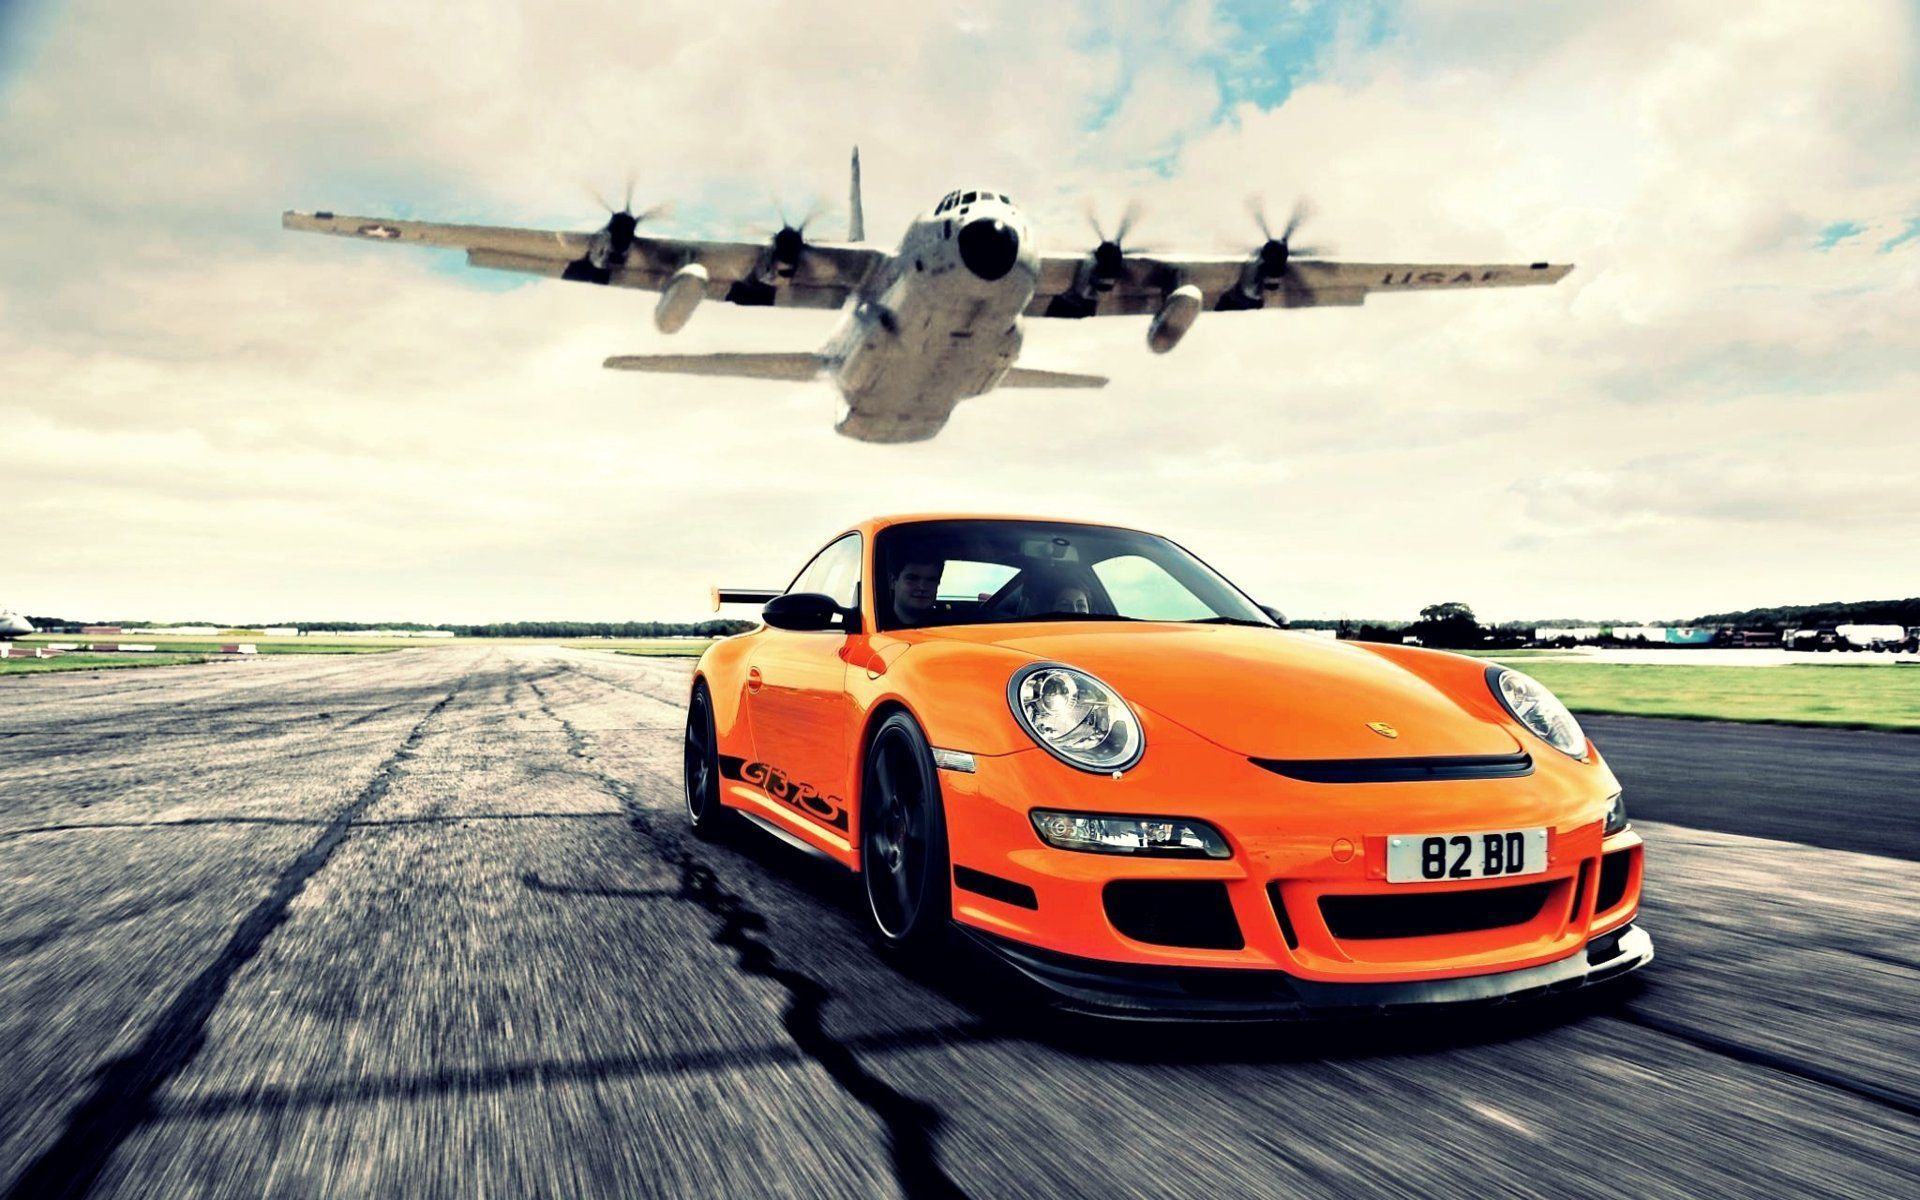 Hình nền xe hơi Porsche 911 màu cam